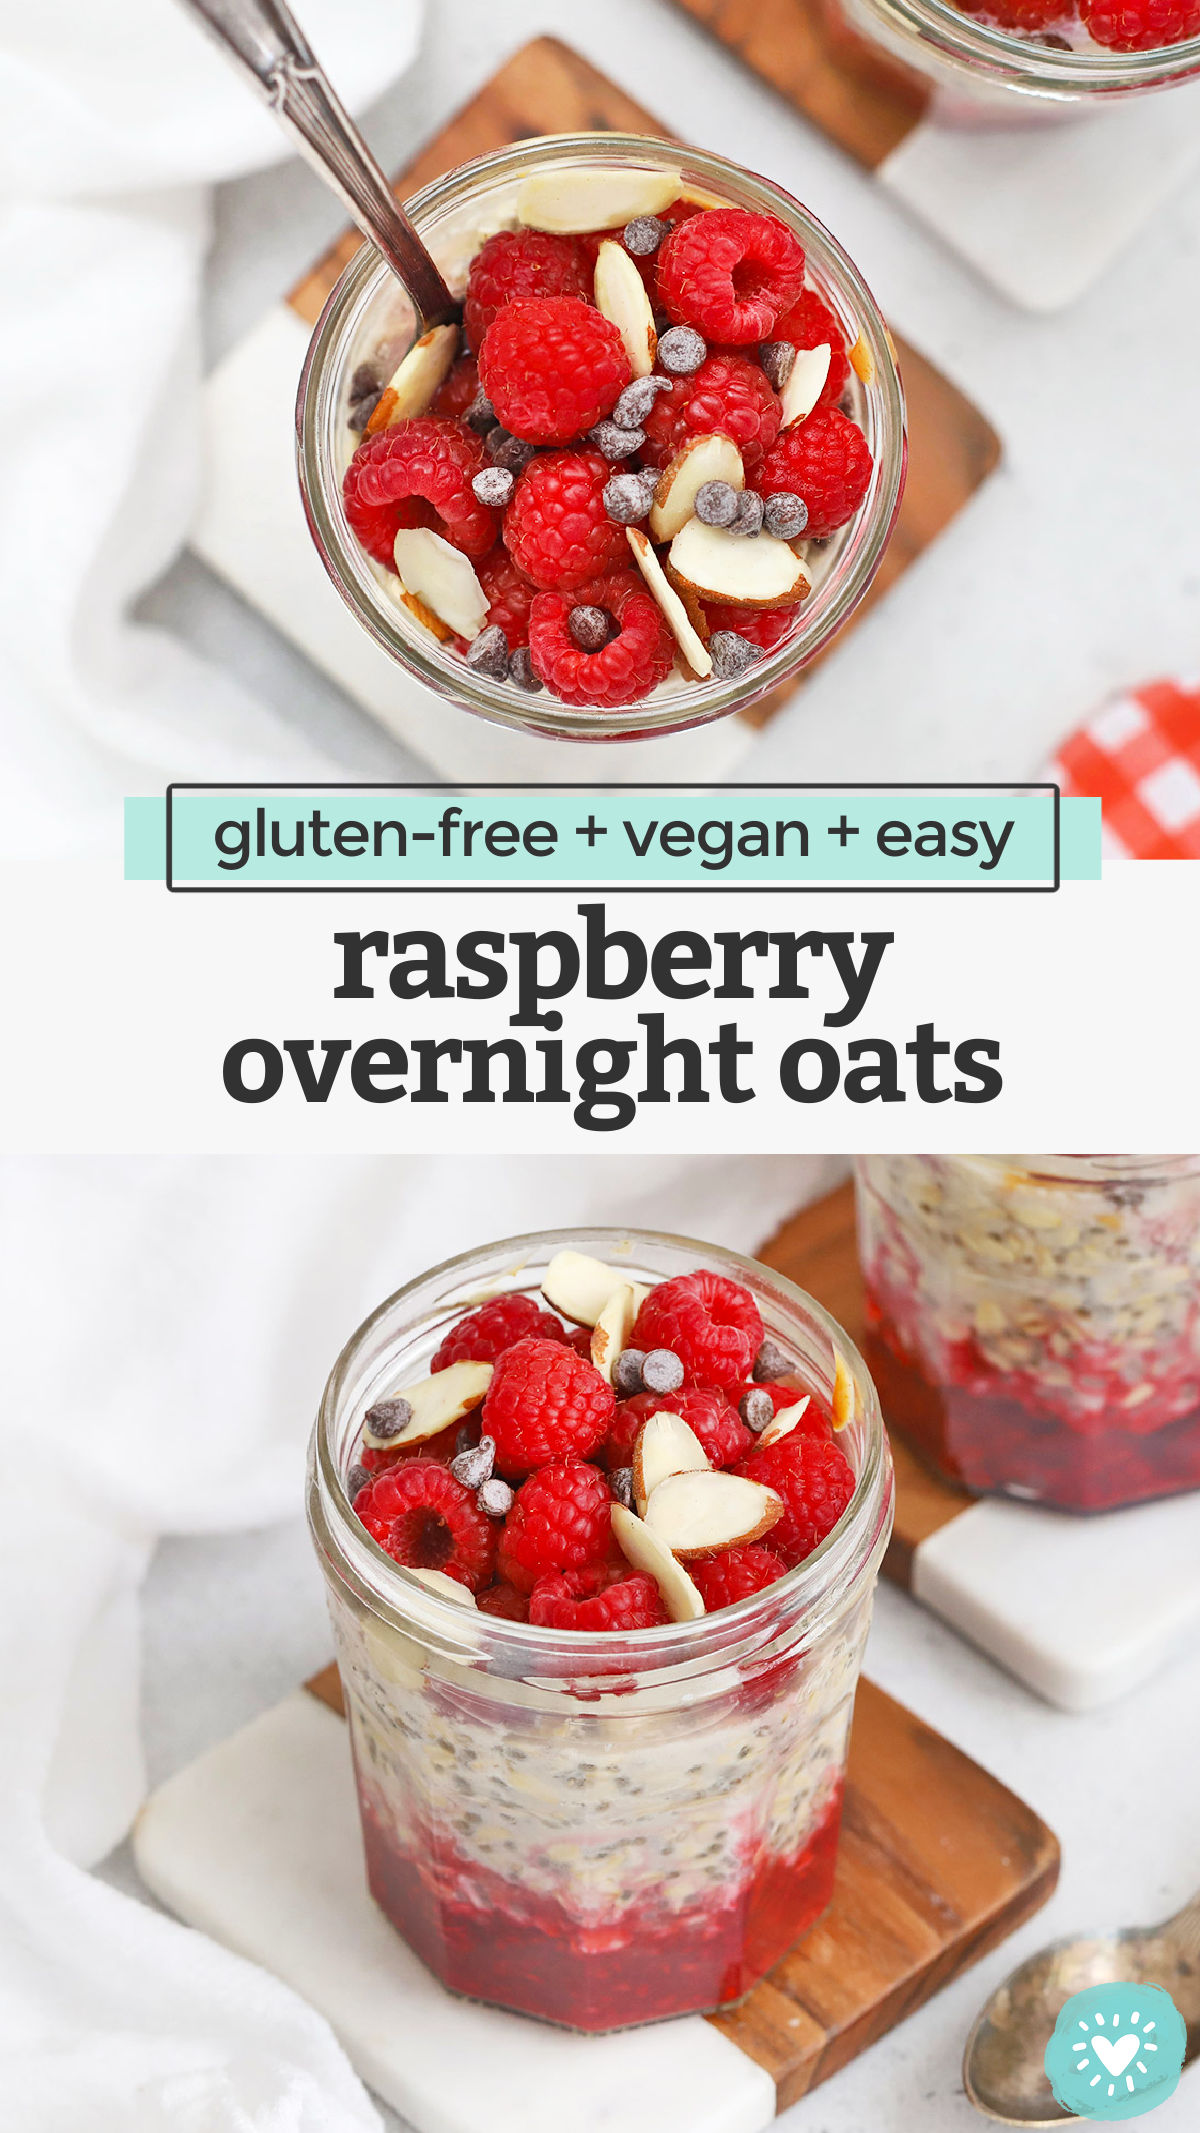 Raspberry Overnight Oats - An easy, delicious, healthy meal prep breakfast! // Raspberry Almond Overnight Oats // Raspberry Overnight Oats Recipe // Berry Overnight Oats // Vegan breakfast // healthy breakfast // gluten-free breakfast #overnightoats #oats #oatmeal #healthybreakfast #glutenfree #vegan